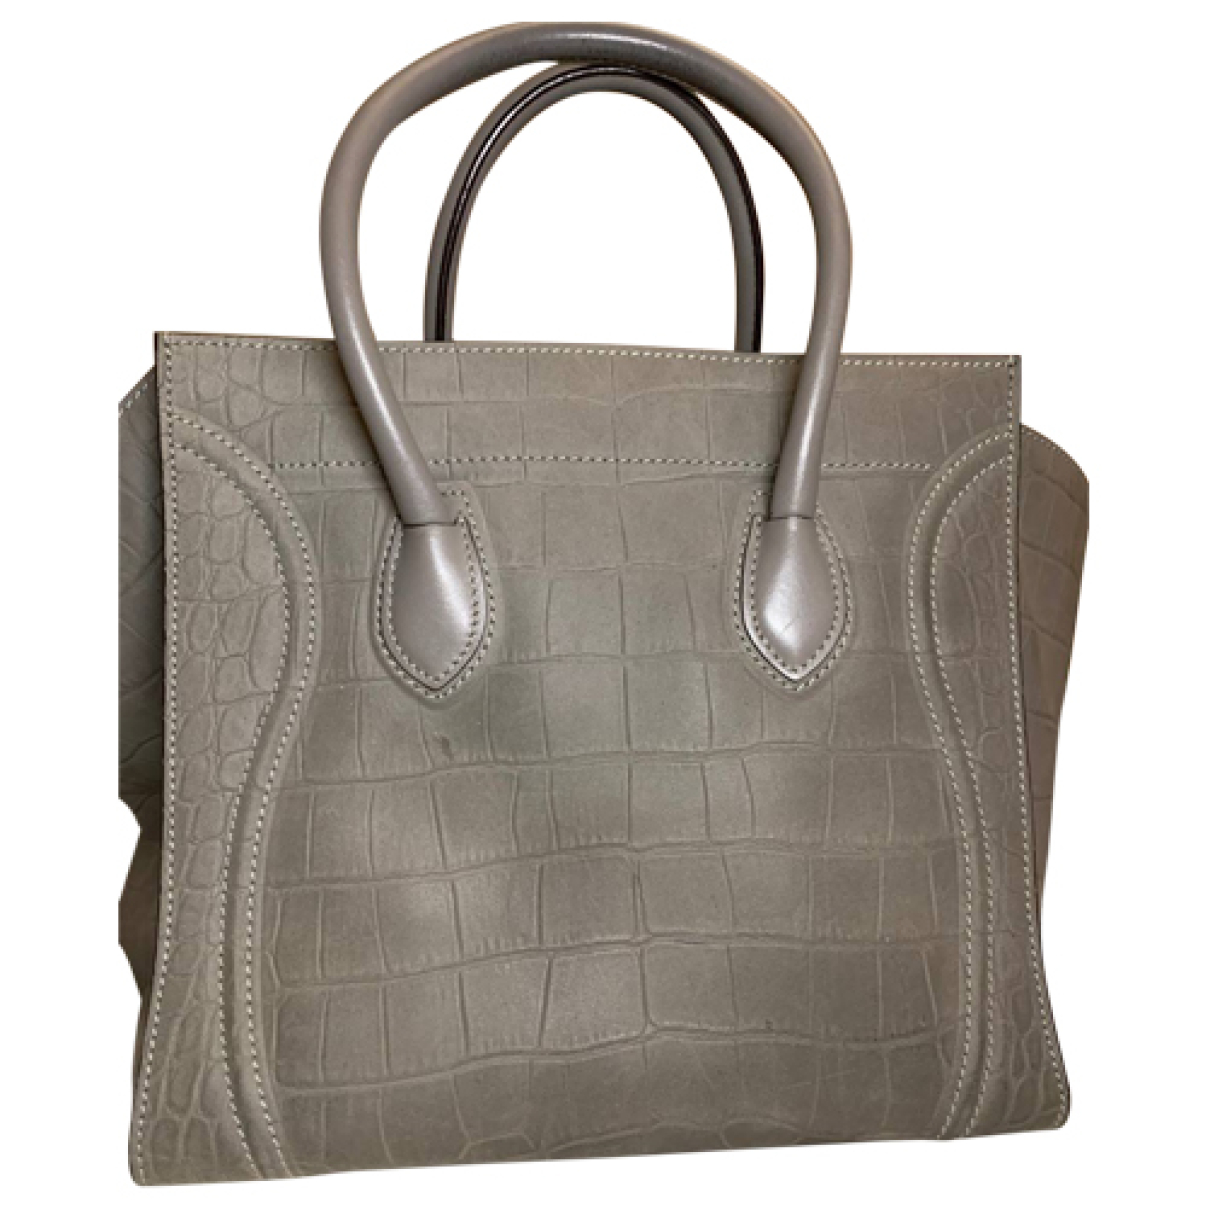 image of Celine Luggage leather handbag